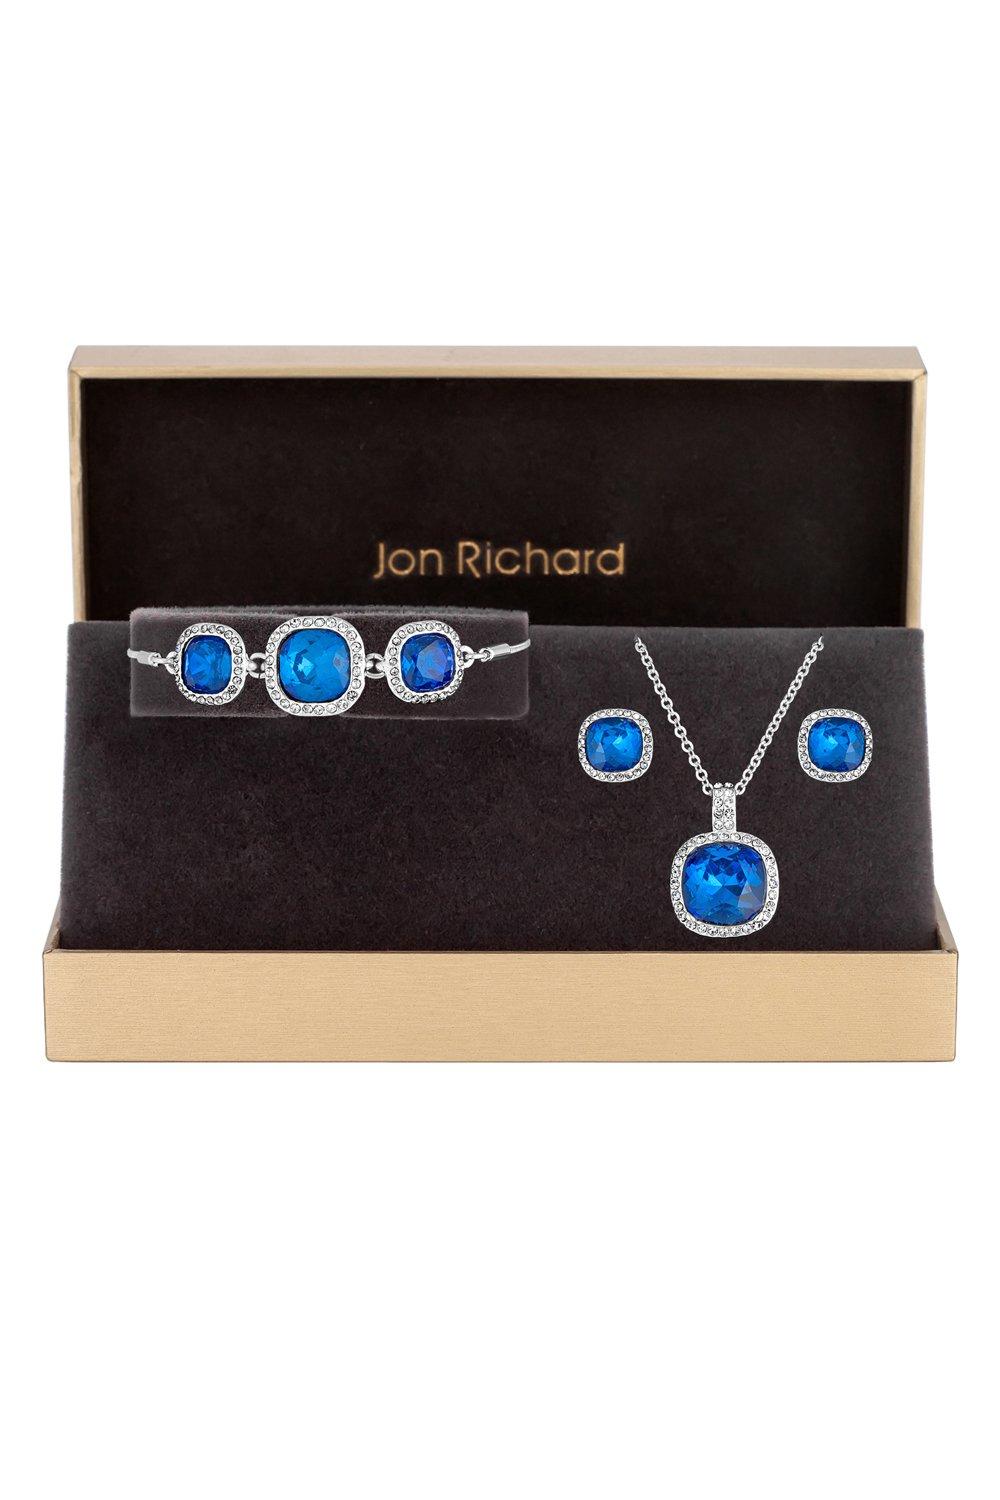 Jon Richard Jon Richard Silver Plated And Bermuda Blue Trio Set - Gift Boxed